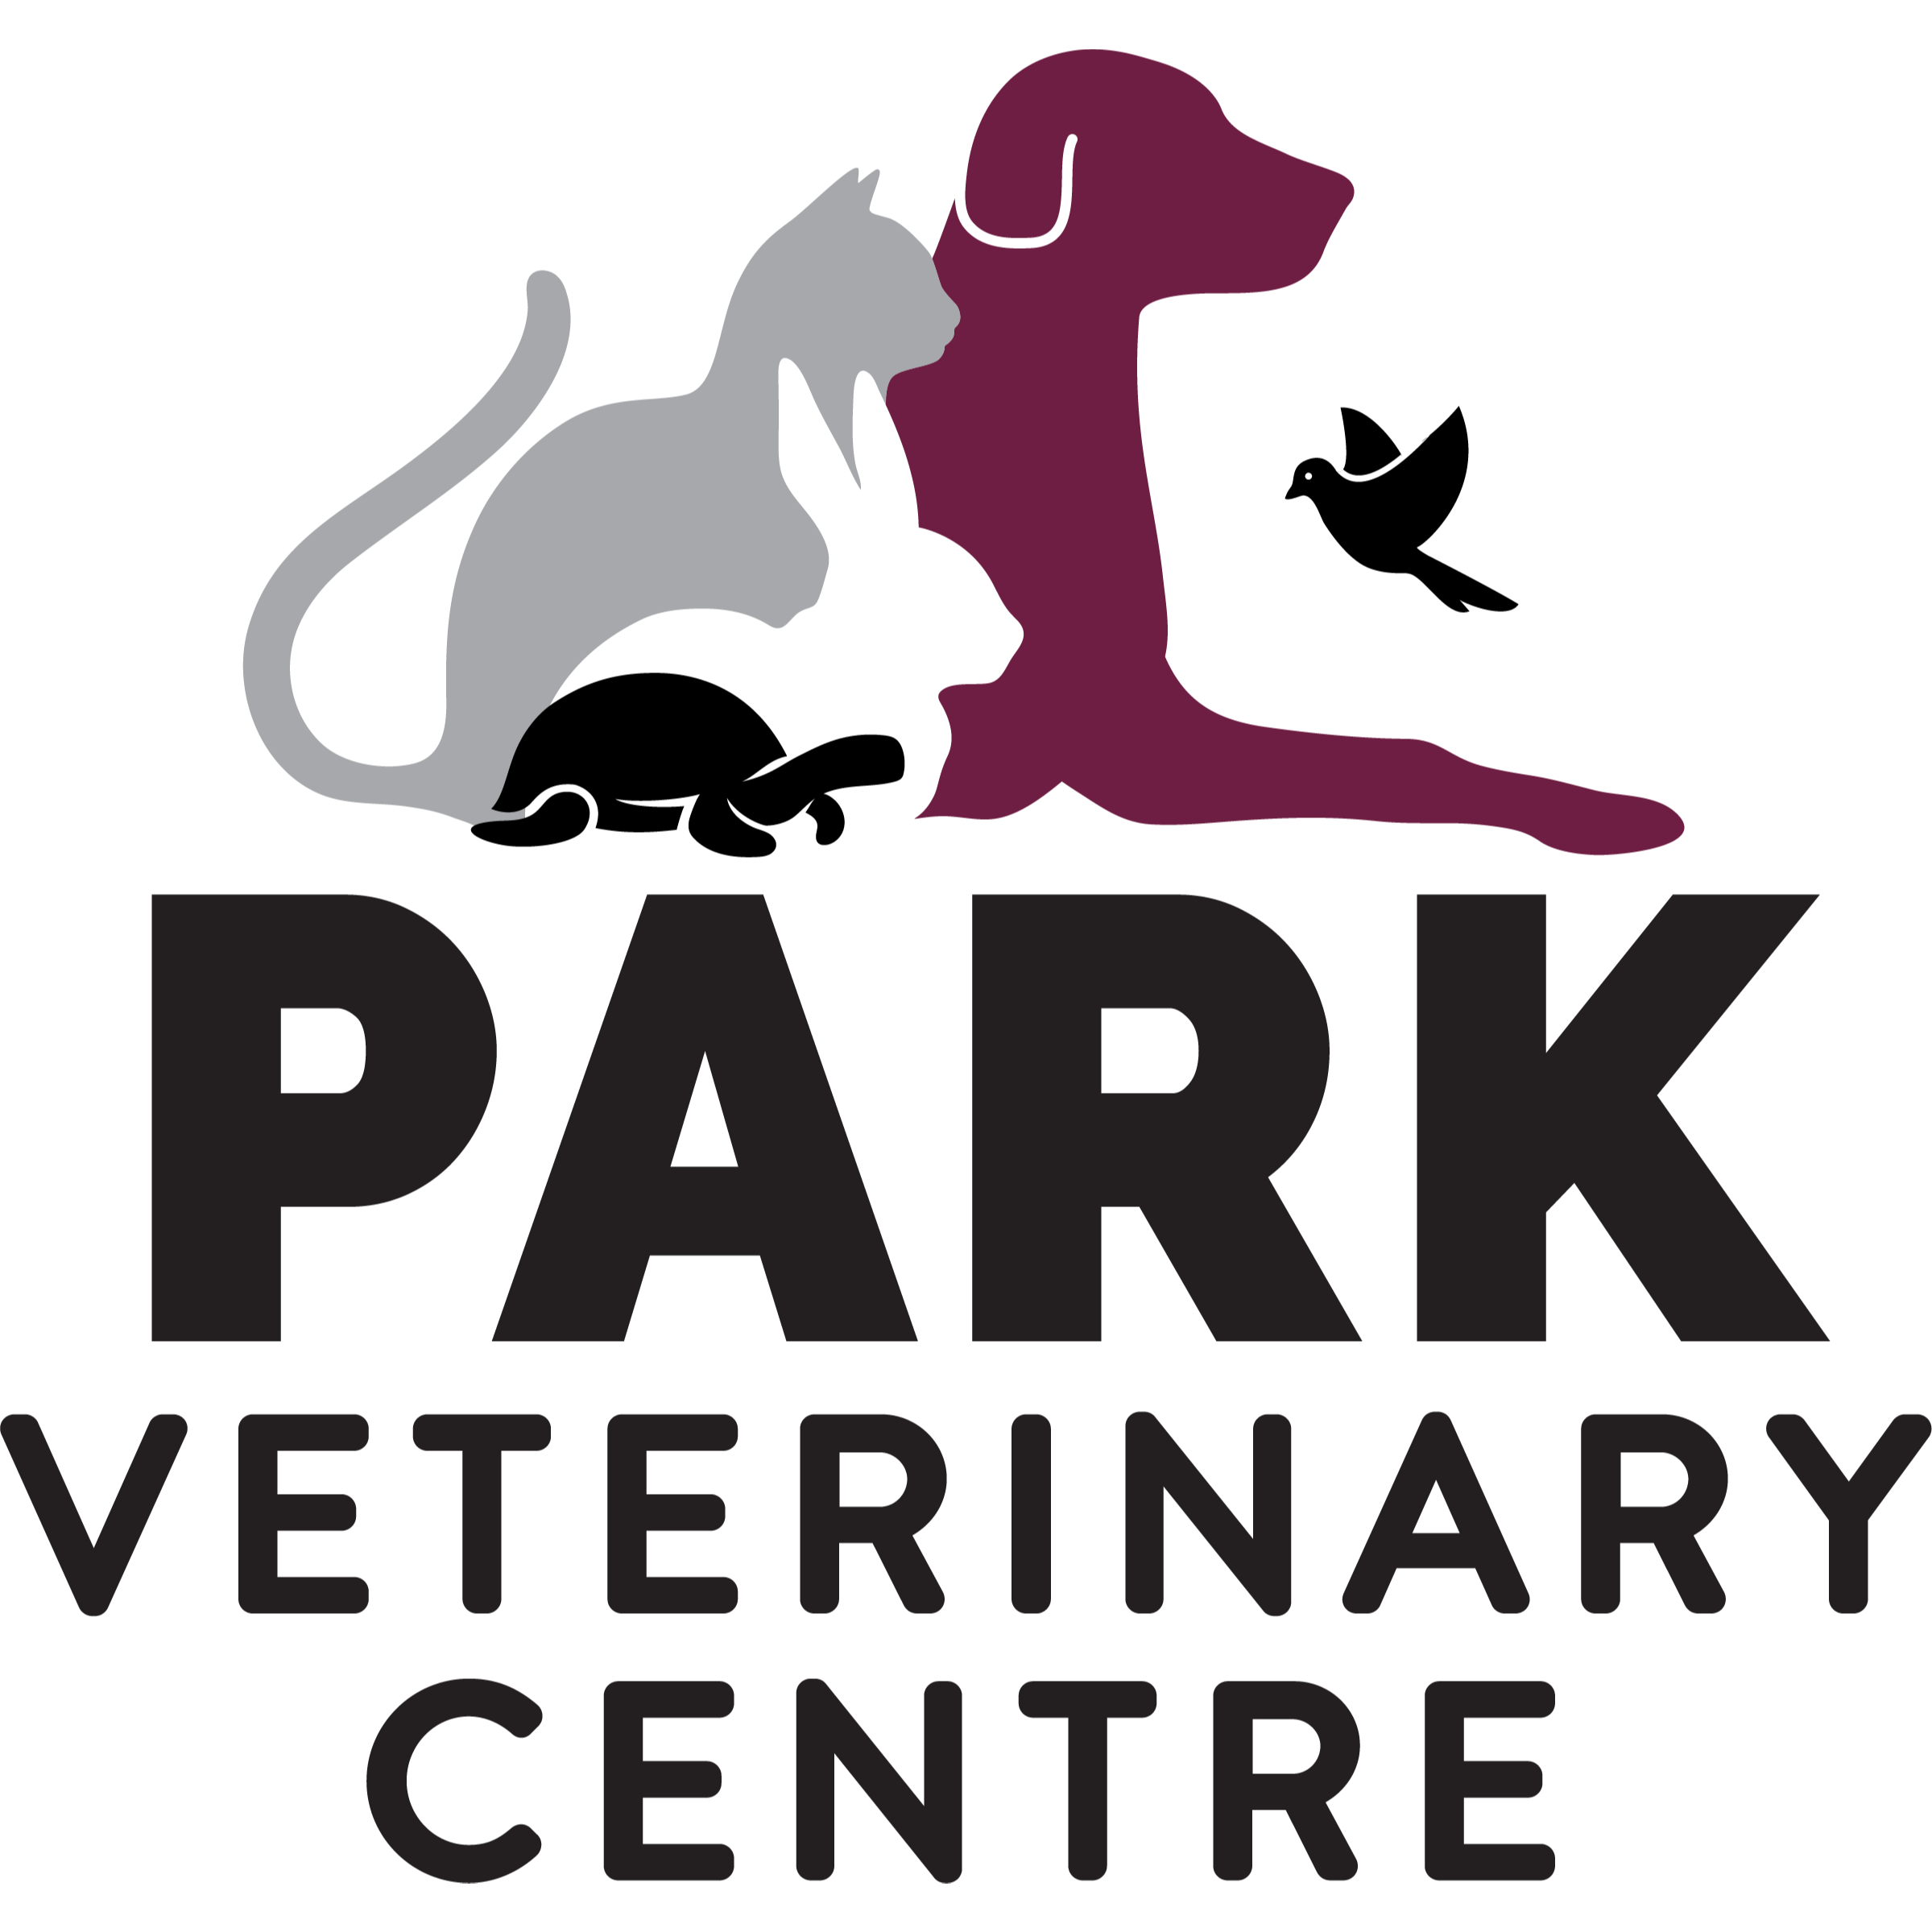 Park Veterinary Centre